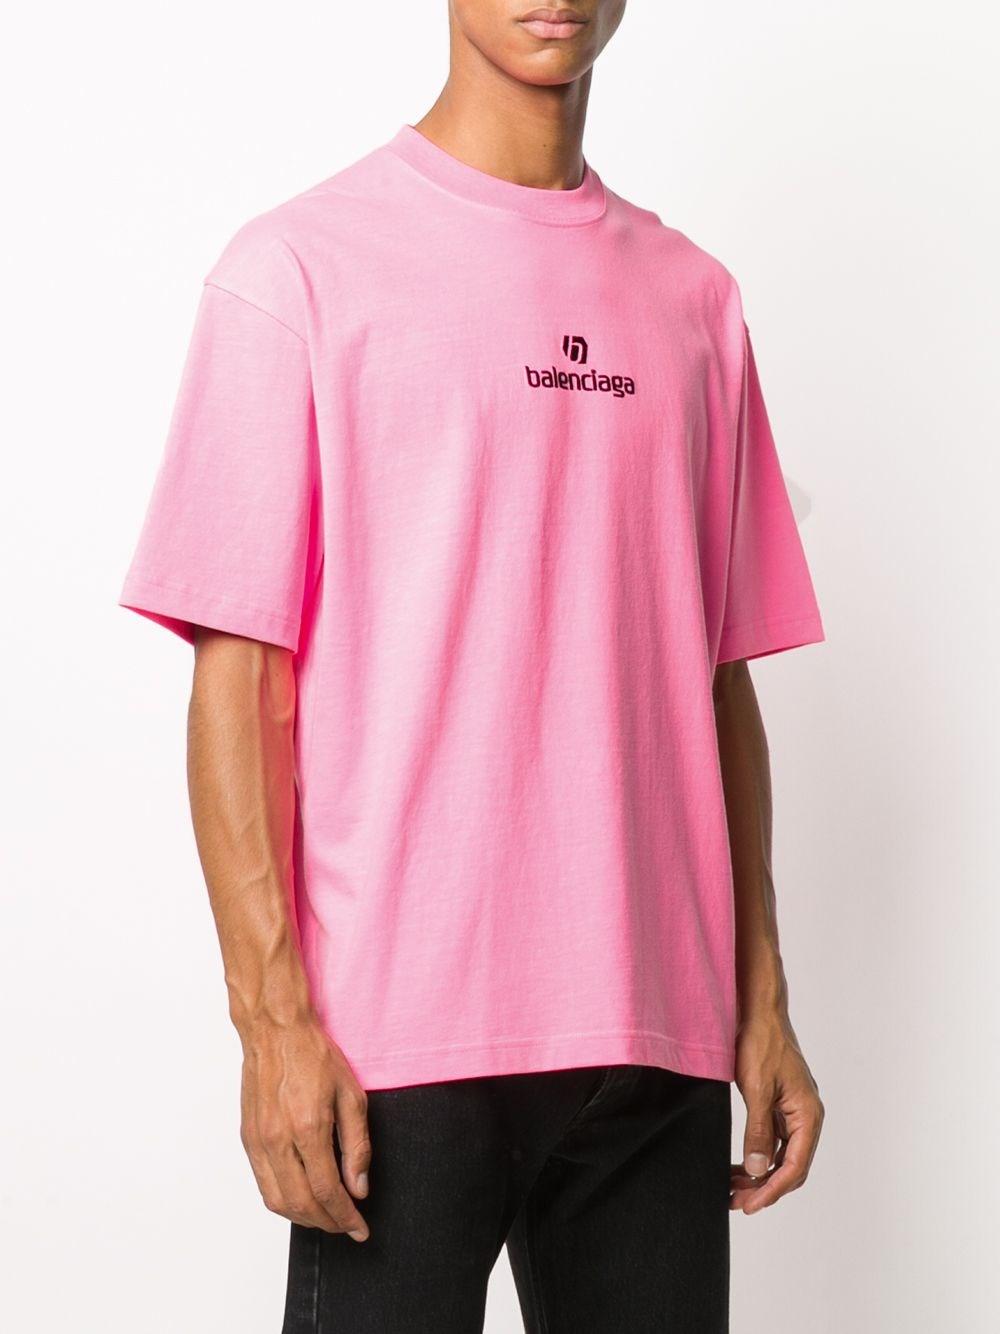 balenciaga t shirt pink logo